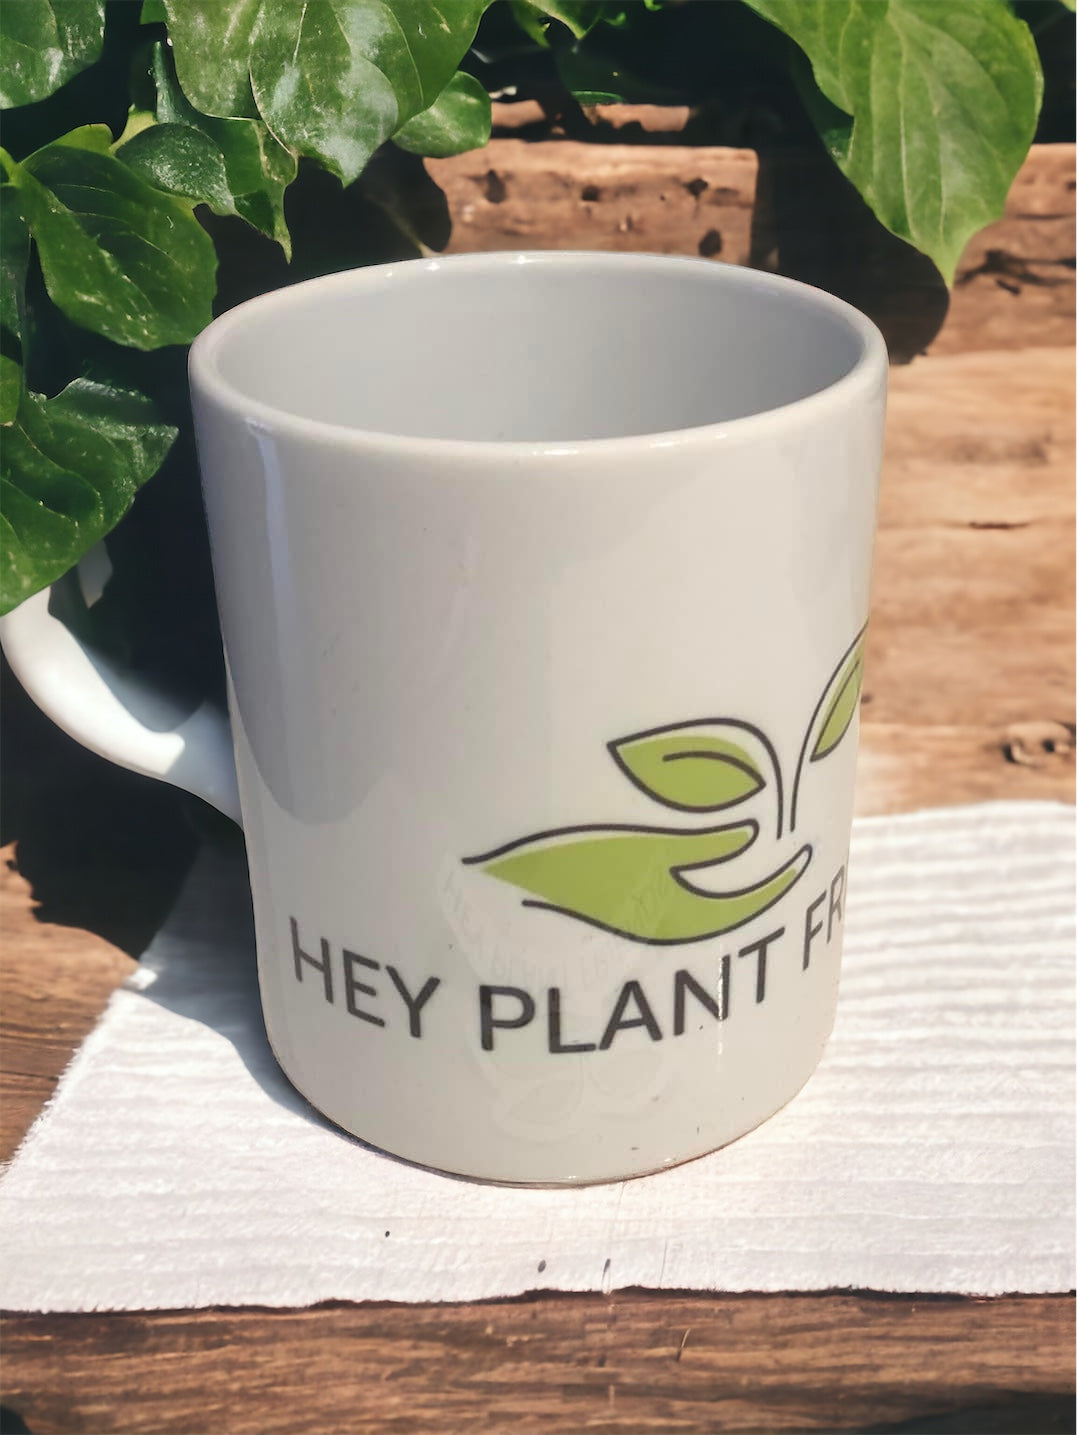 Hey Plant Friends Mug